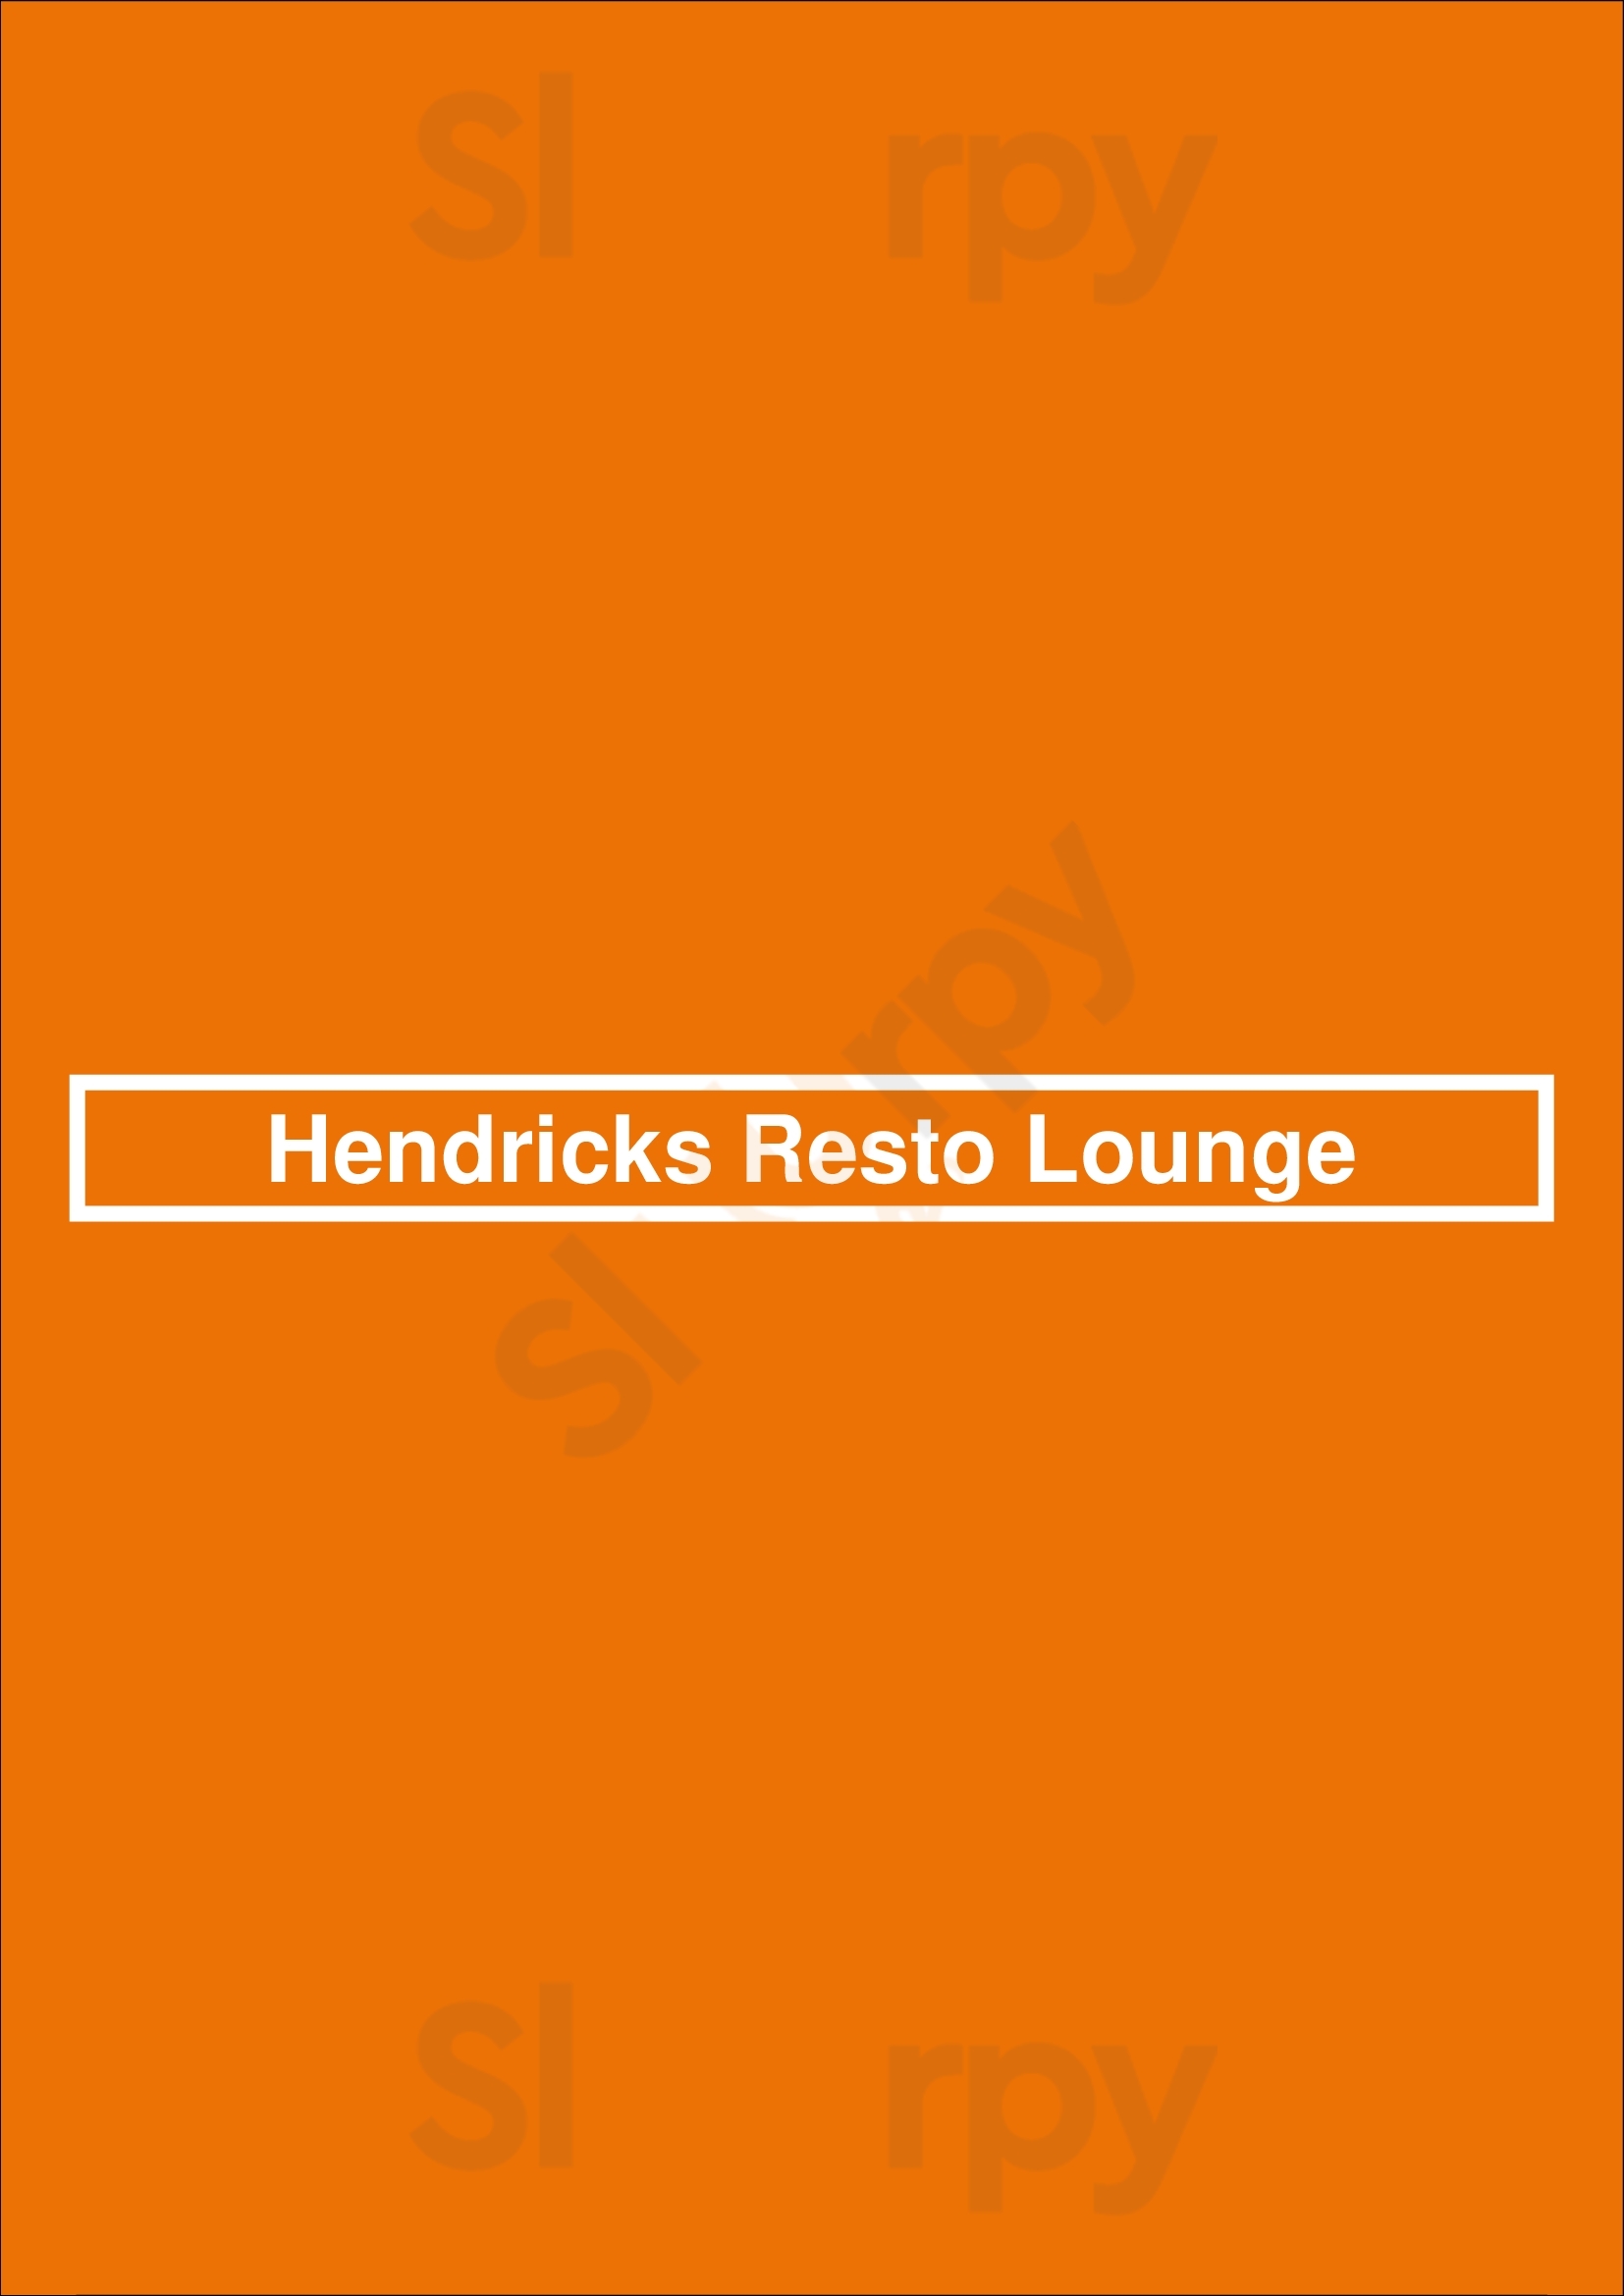 Hendricks Resto Lounge Vancouver Menu - 1